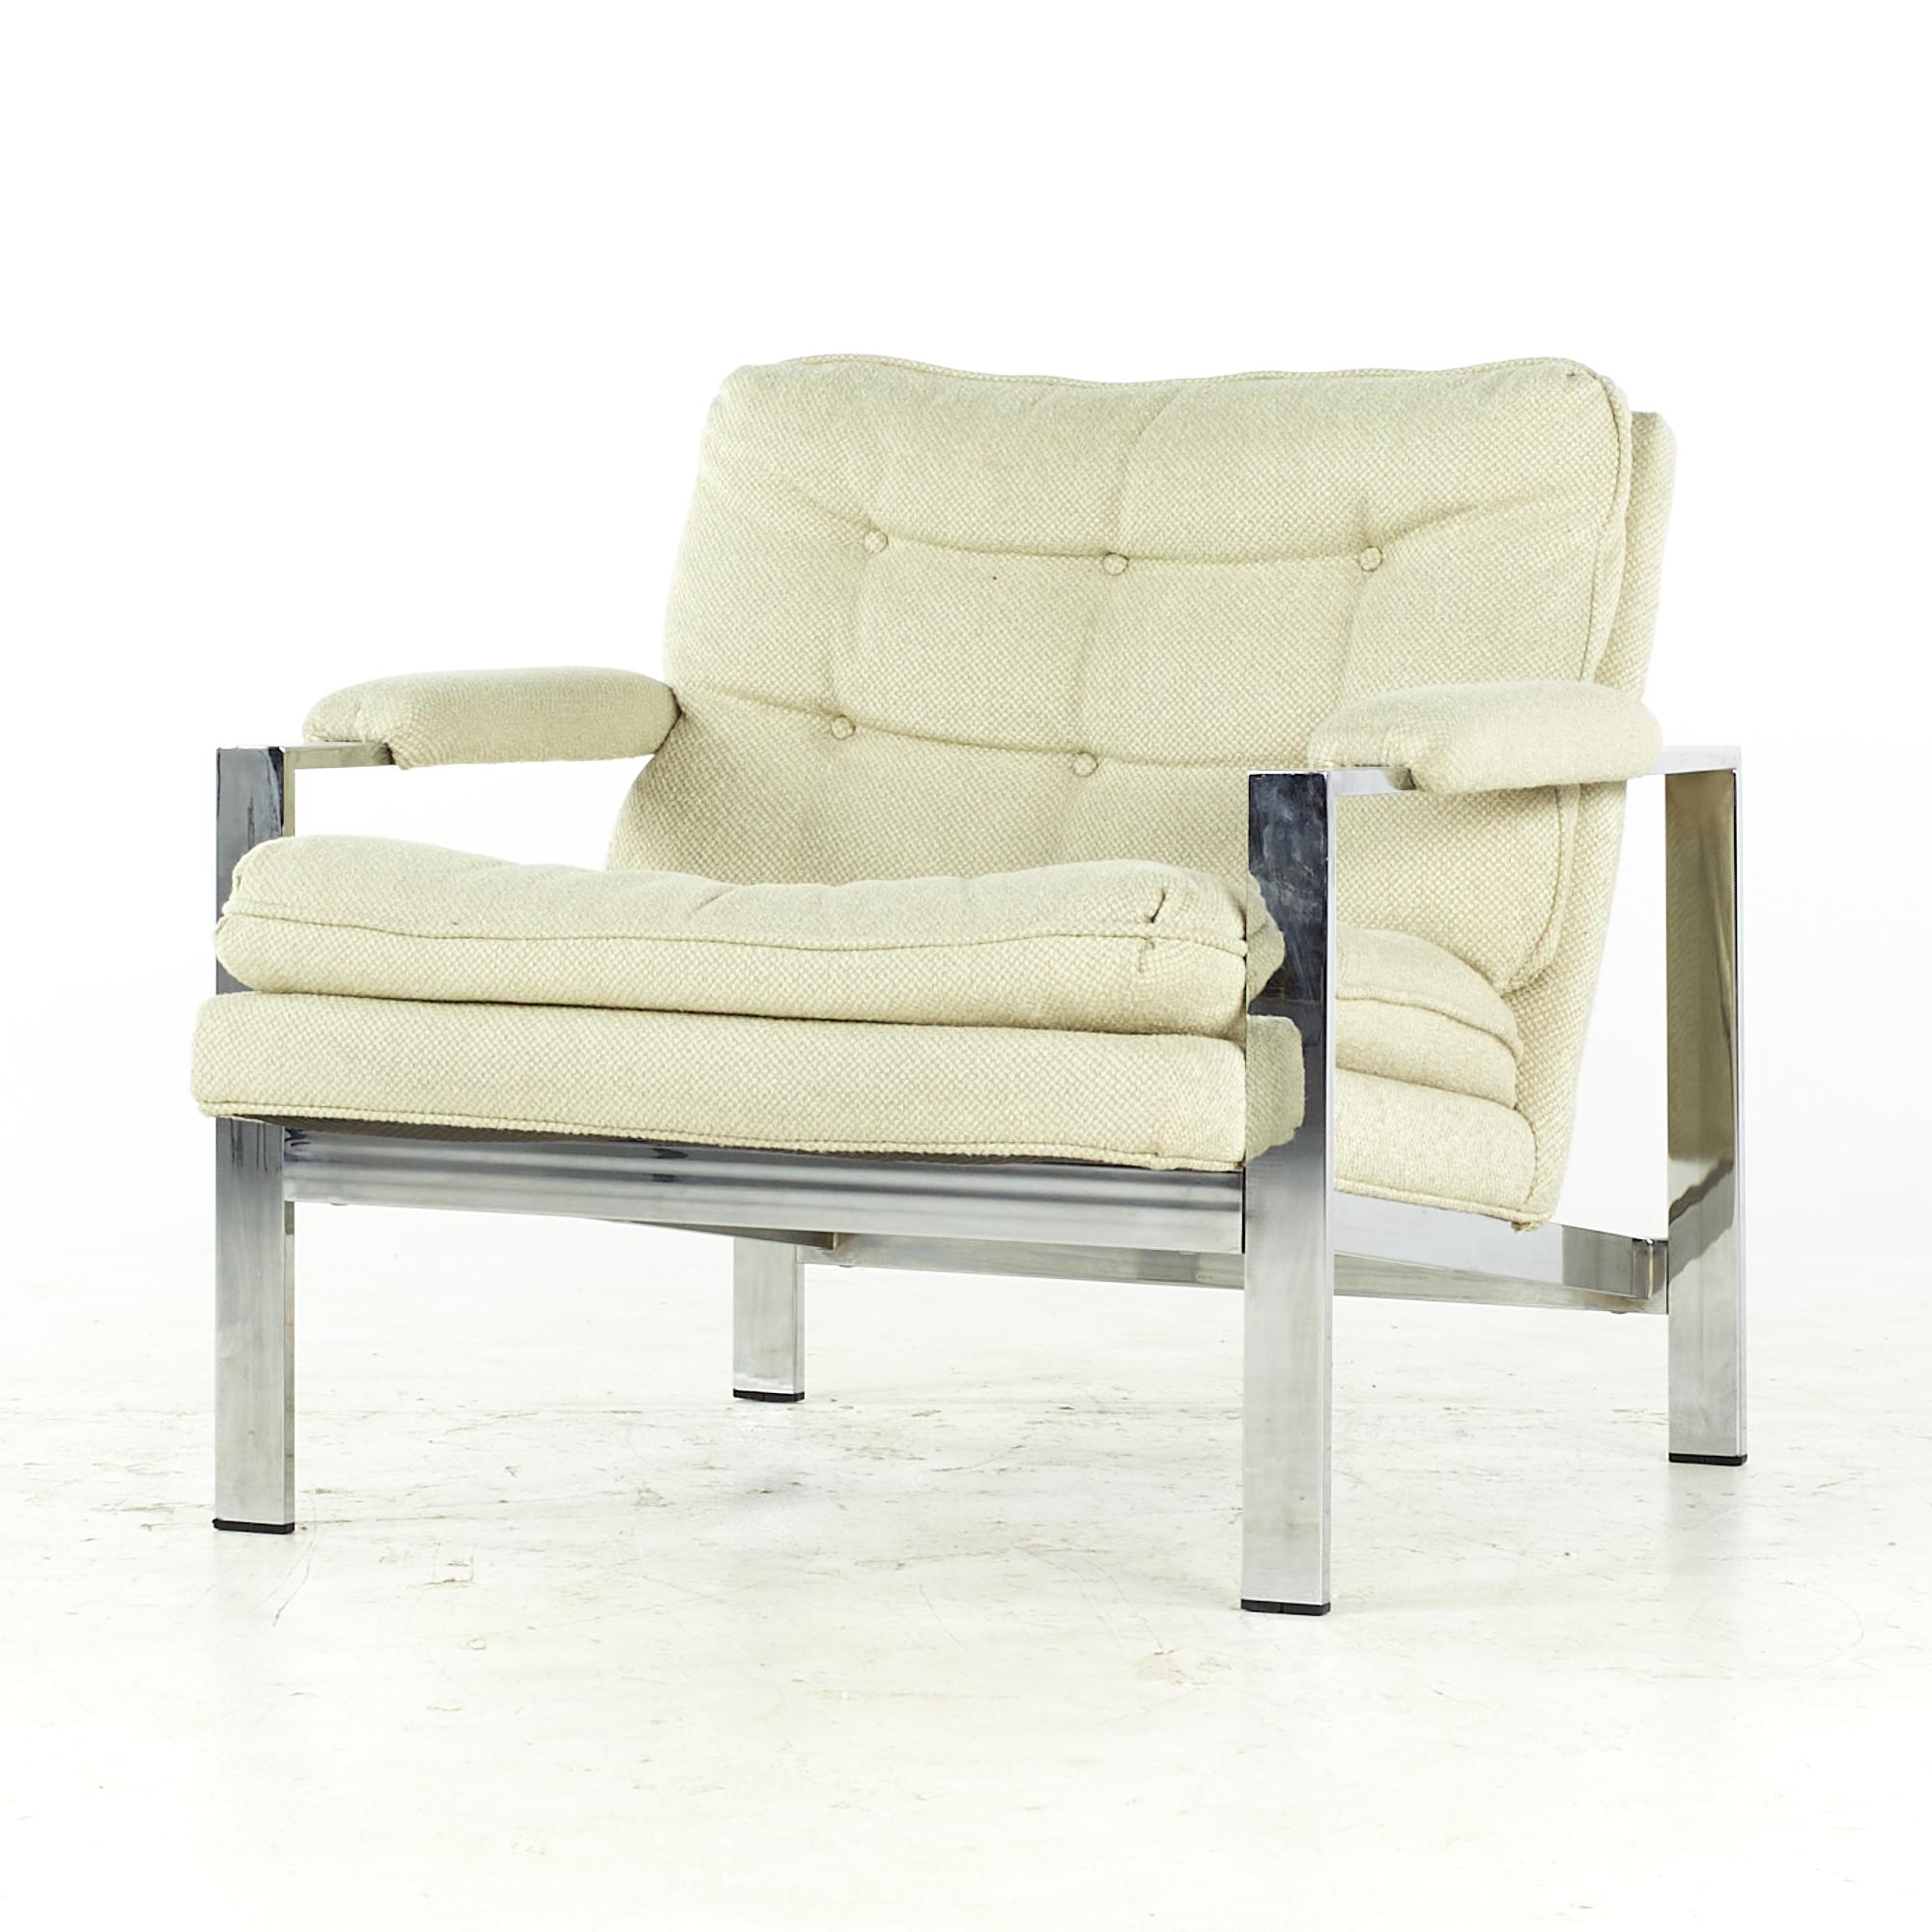 Late 20th Century Milo Baughman Style Midcentury Italian Flatbar Lounge Chairs, Pair For Sale